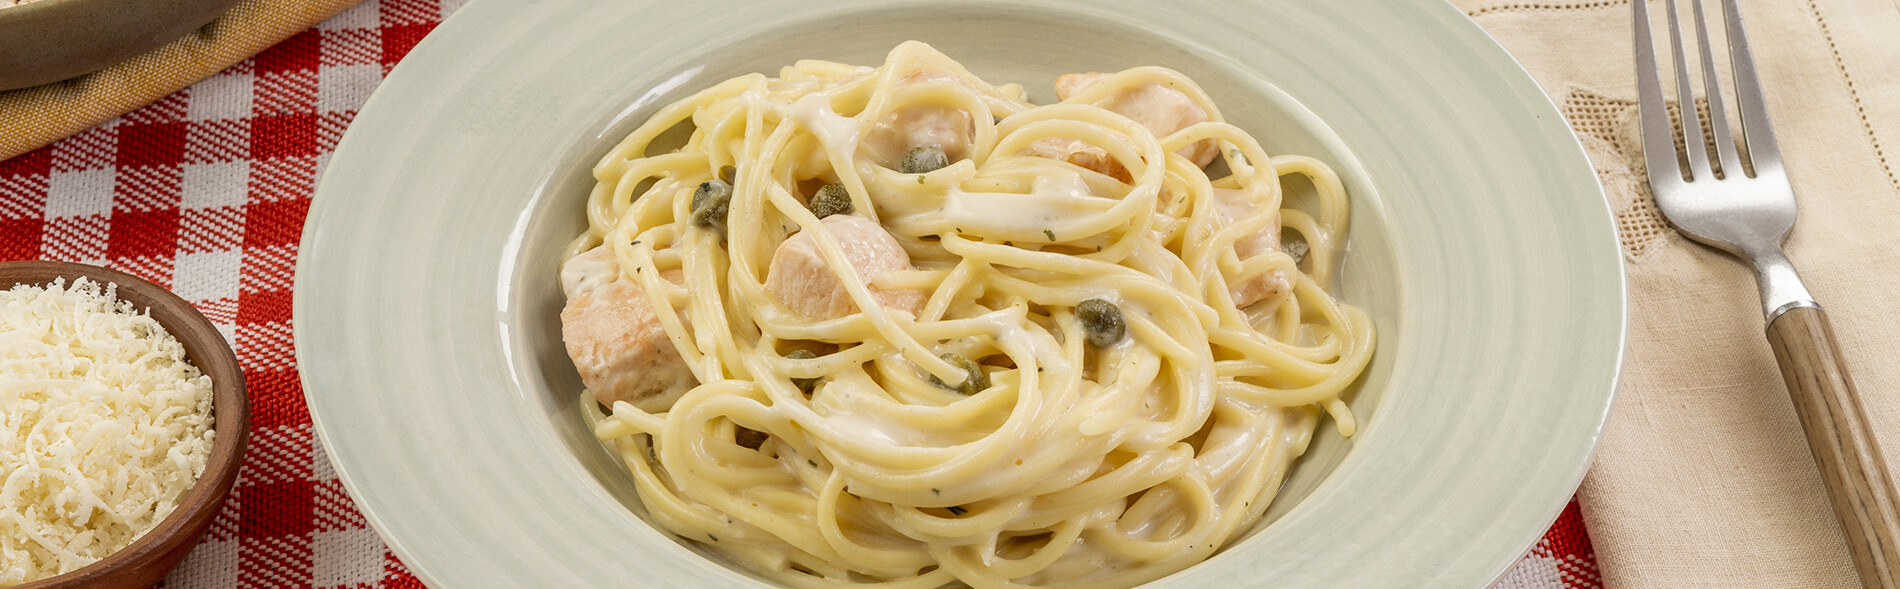 Spaghetti con salmon y crema | Carozzi me encanta